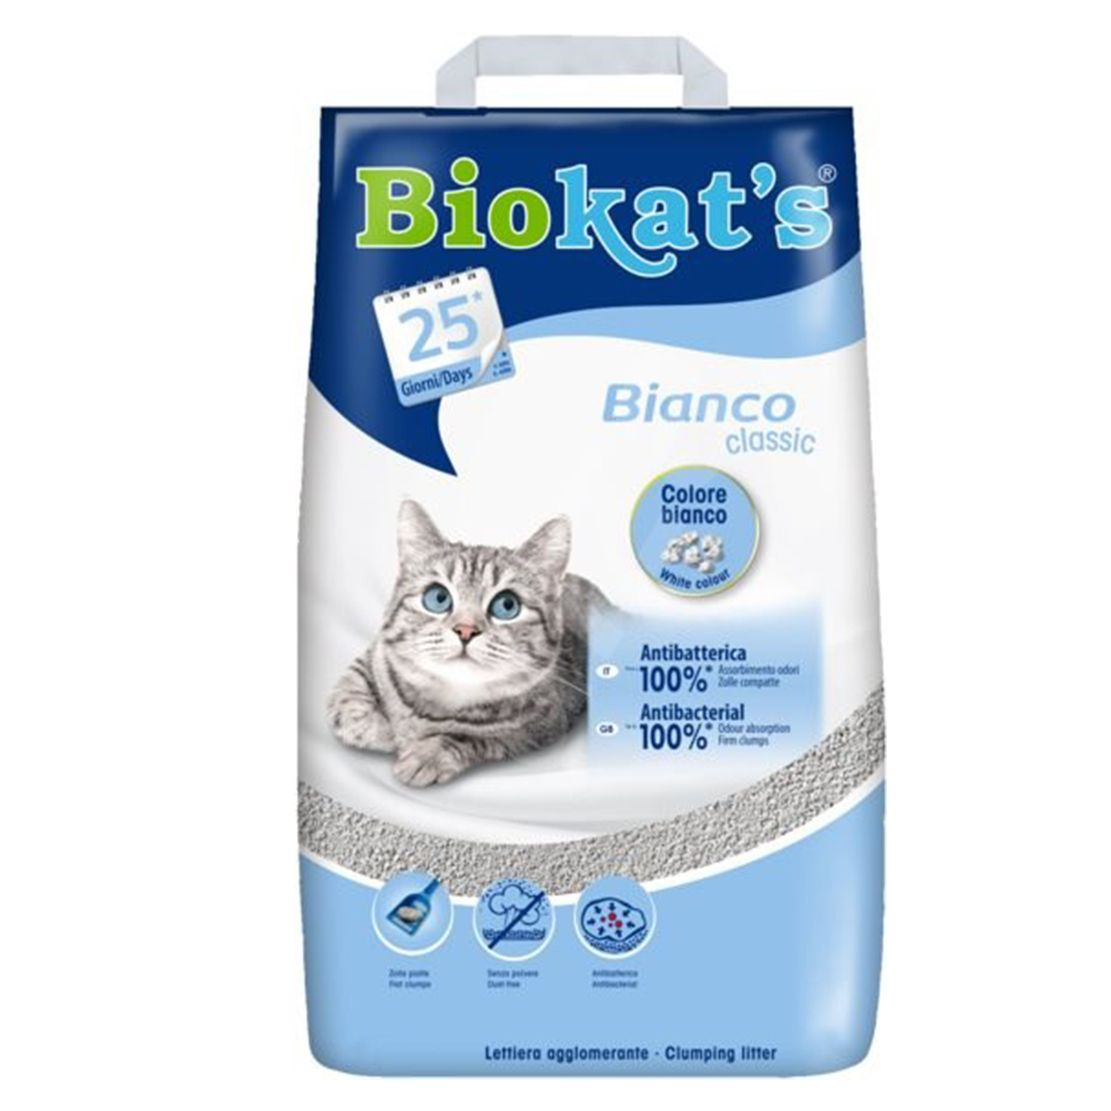 Biokat’s Bianco classic alom 5 kg